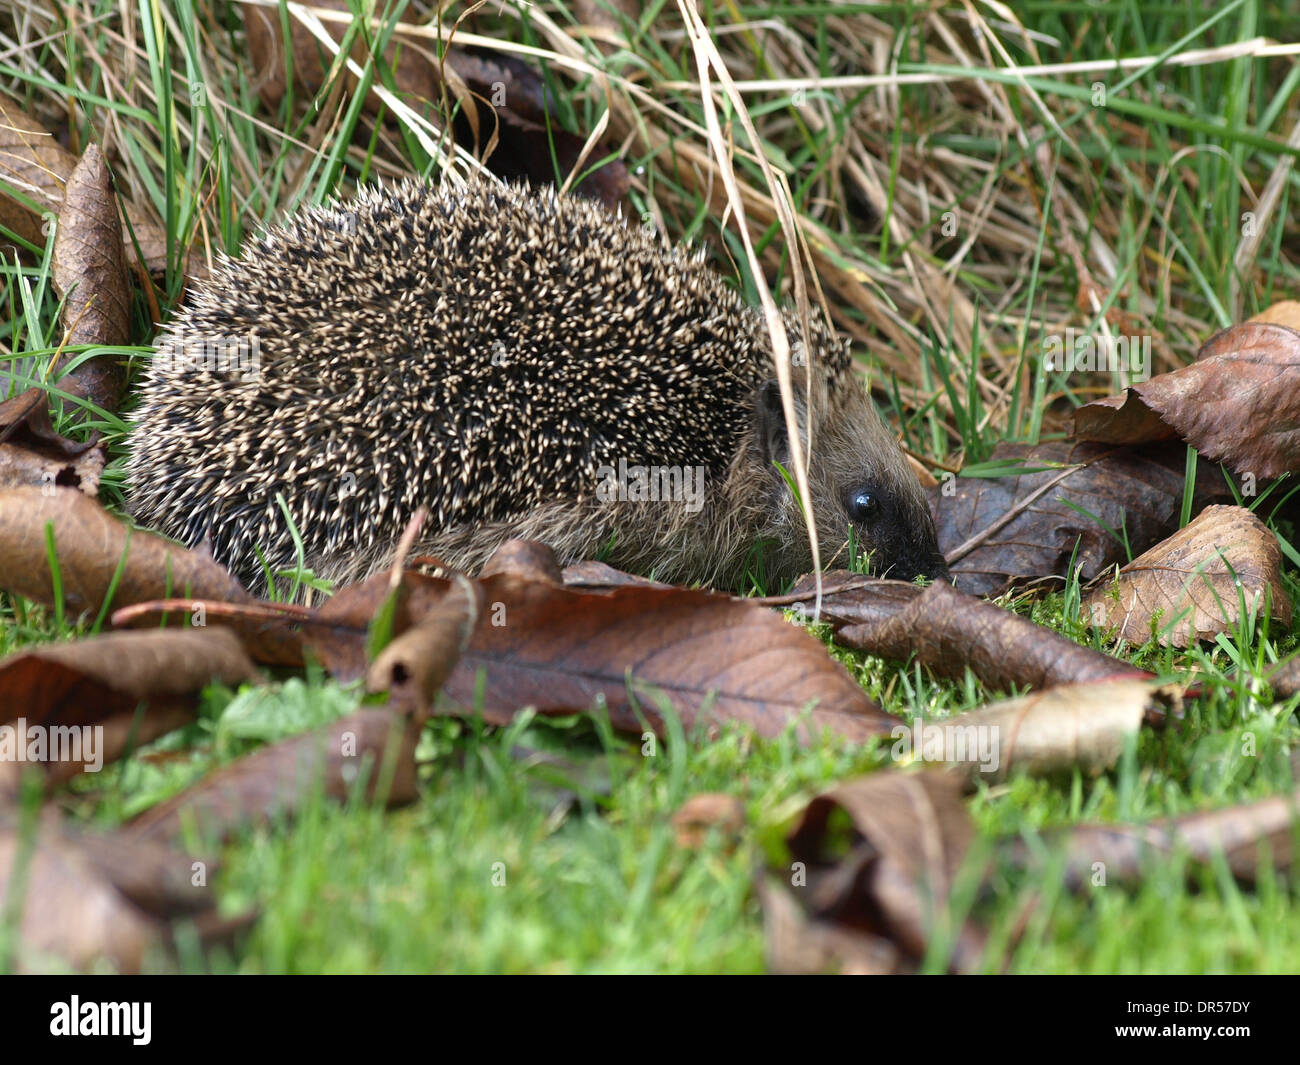 Hedgehog / European Hedgehog / Common Hedgehog / Erinaceus europaeus / Igel / Braunbrustigel / Westeuropäischer Igel / Westigel Stock Photo